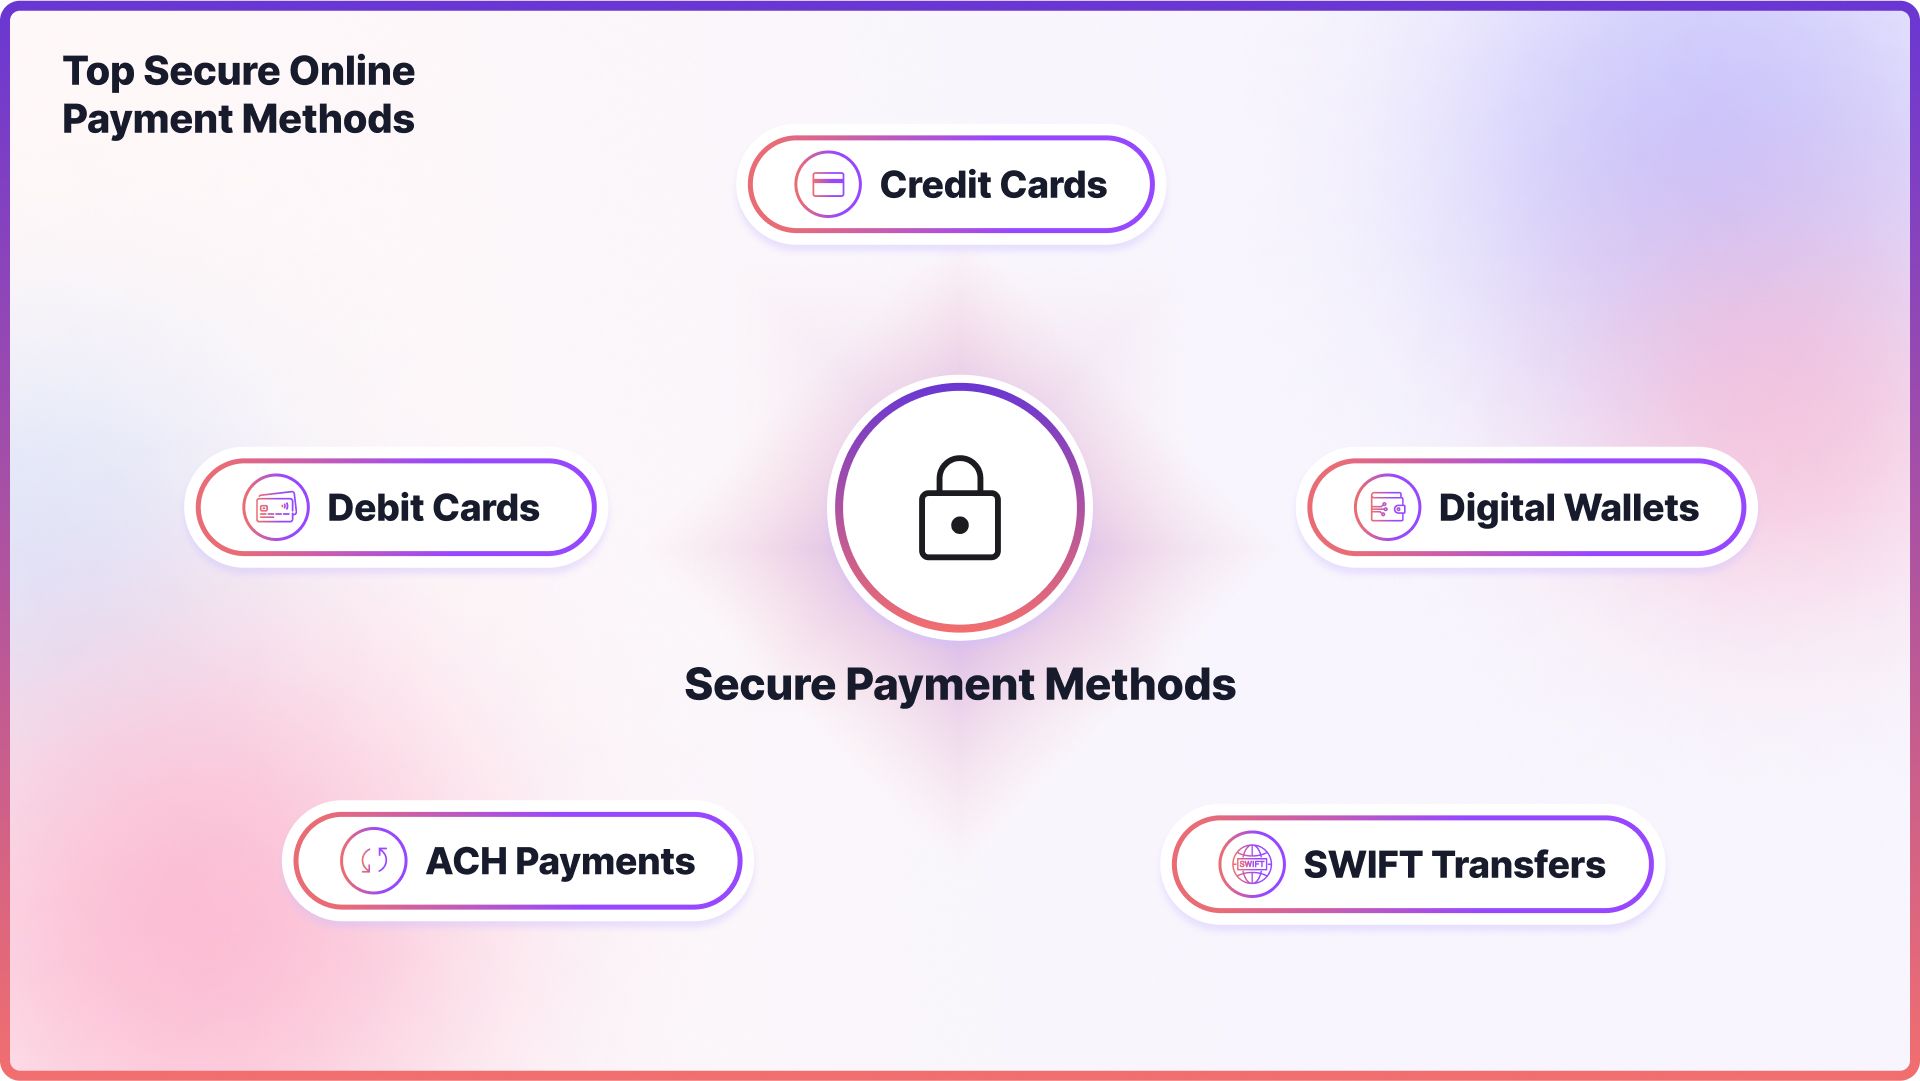 Top secure online payment methods